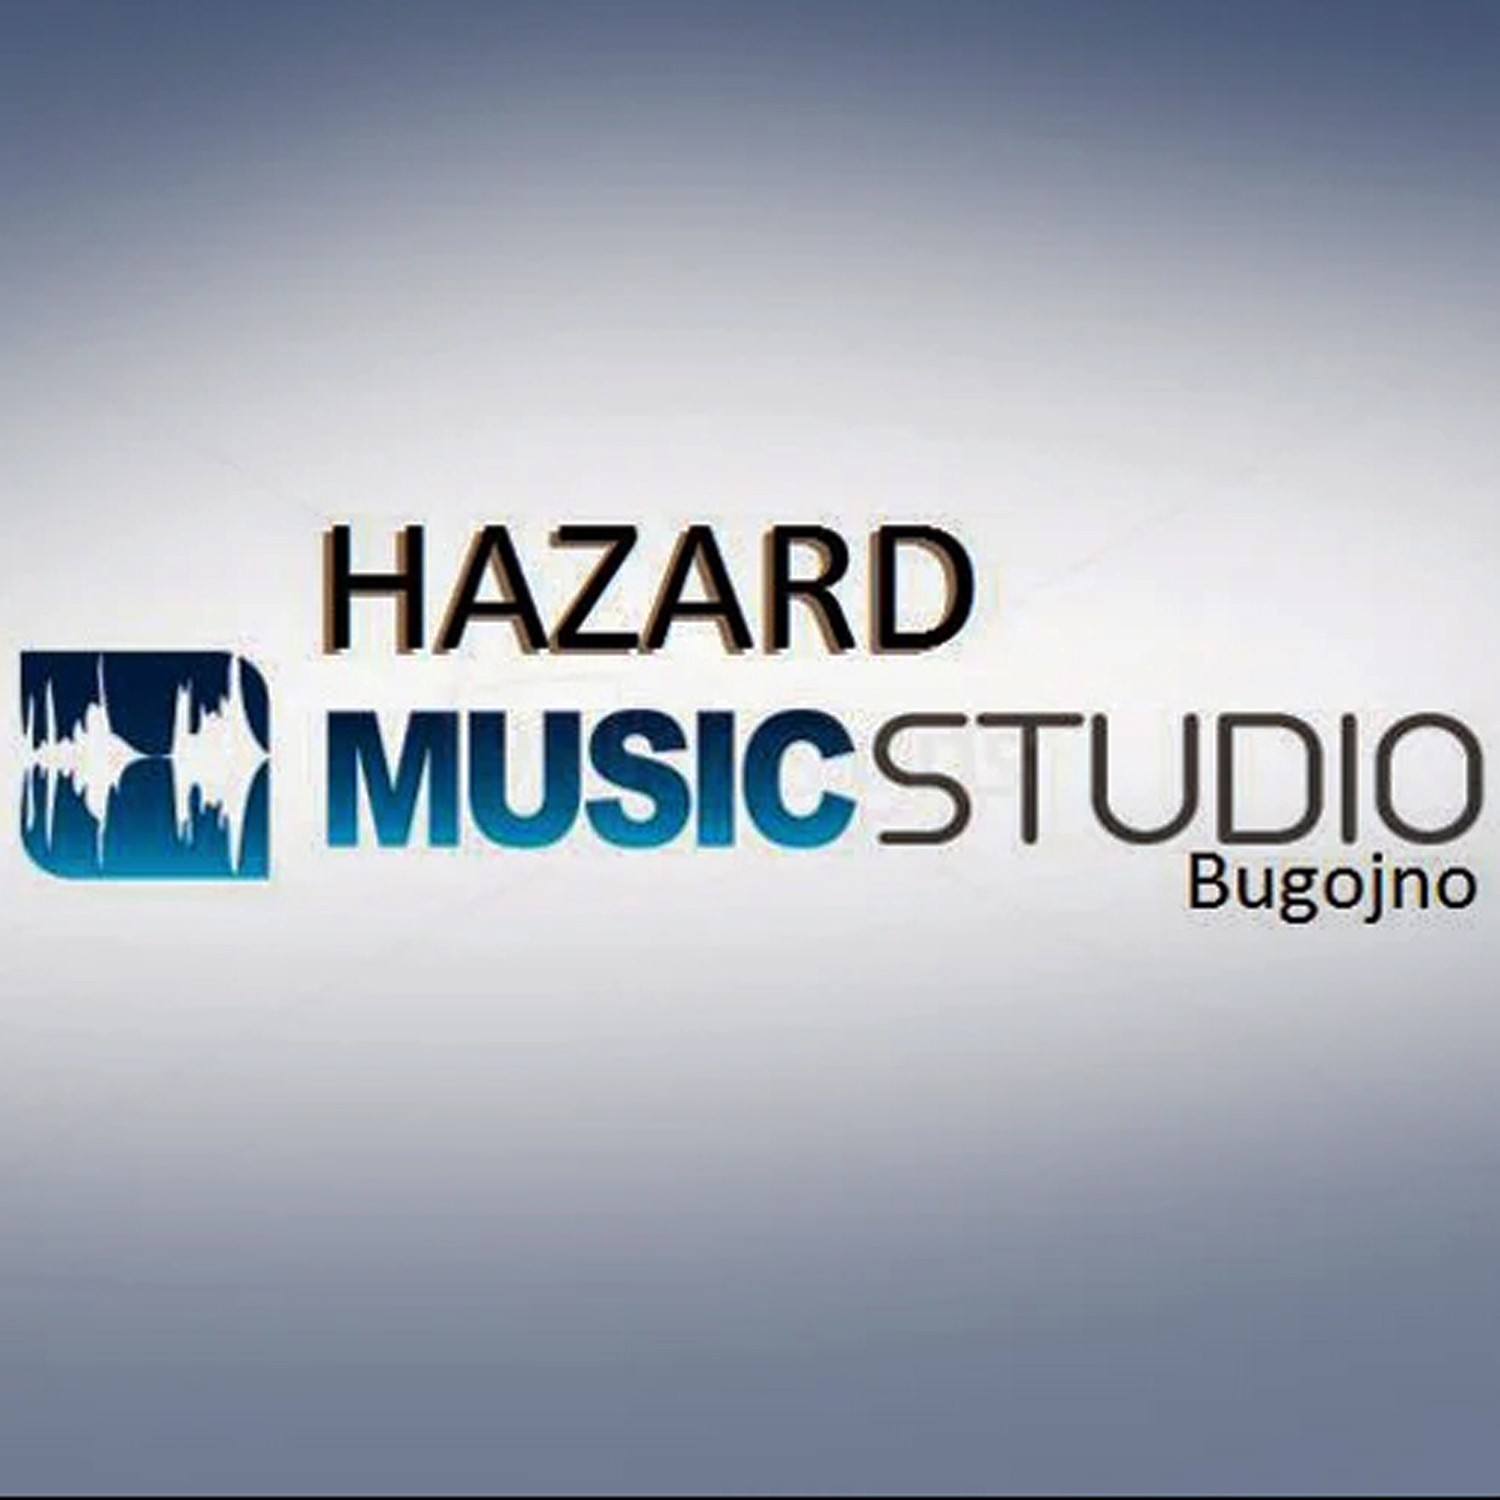 Hazard Music Studio - Facebook, Instagram, Twitter, Snapchat, Website, Telefon, Email - Kontakt & Informacije | EMDC Network